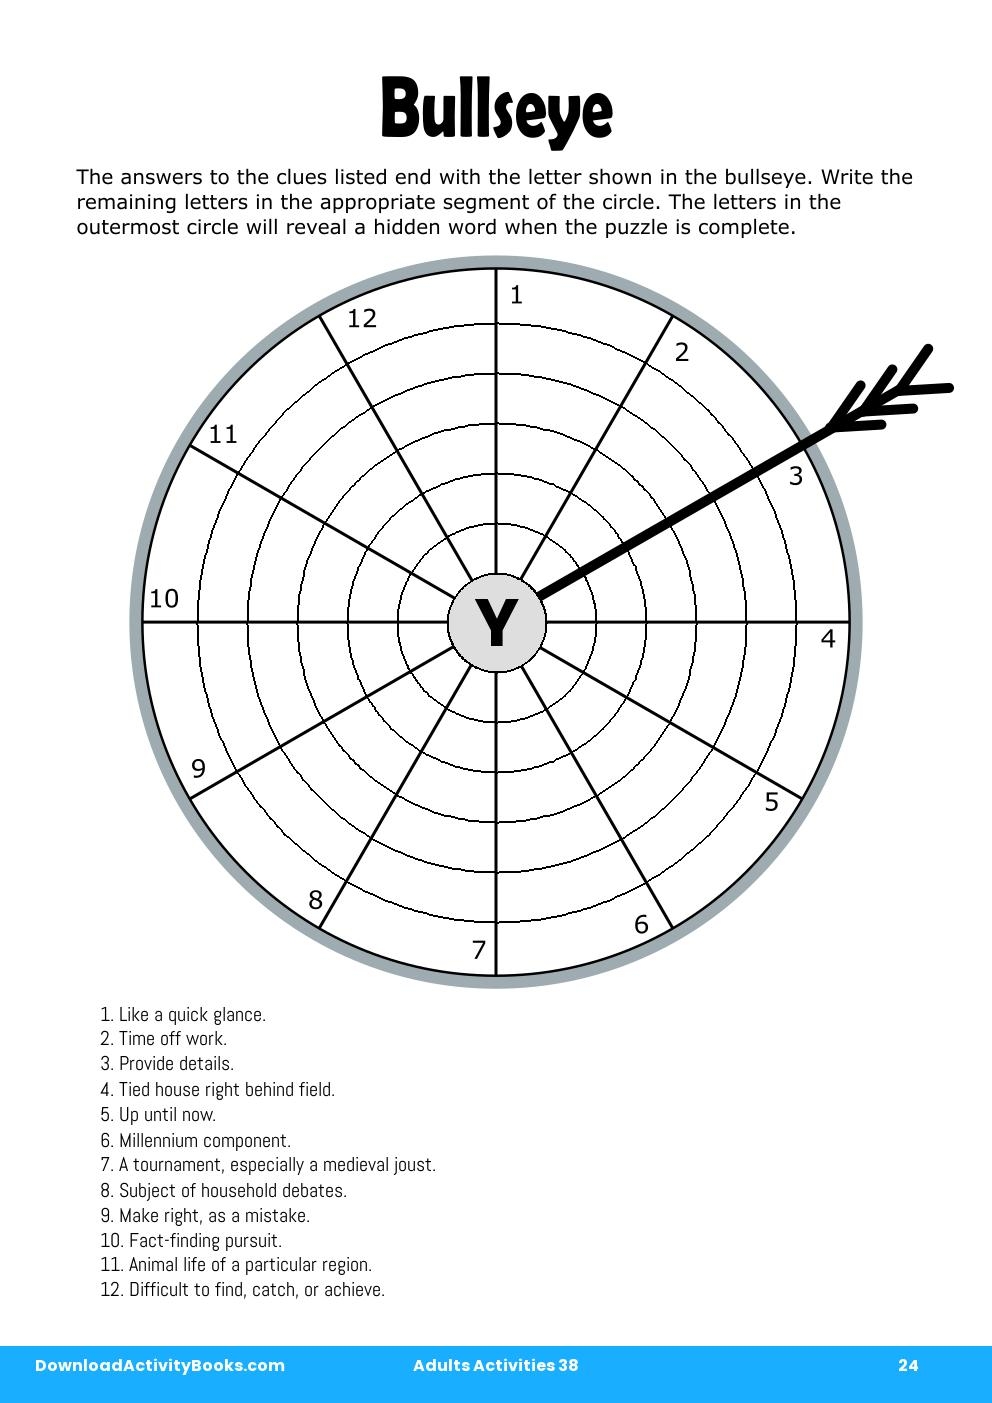 Bullseye in Adults Activities 38